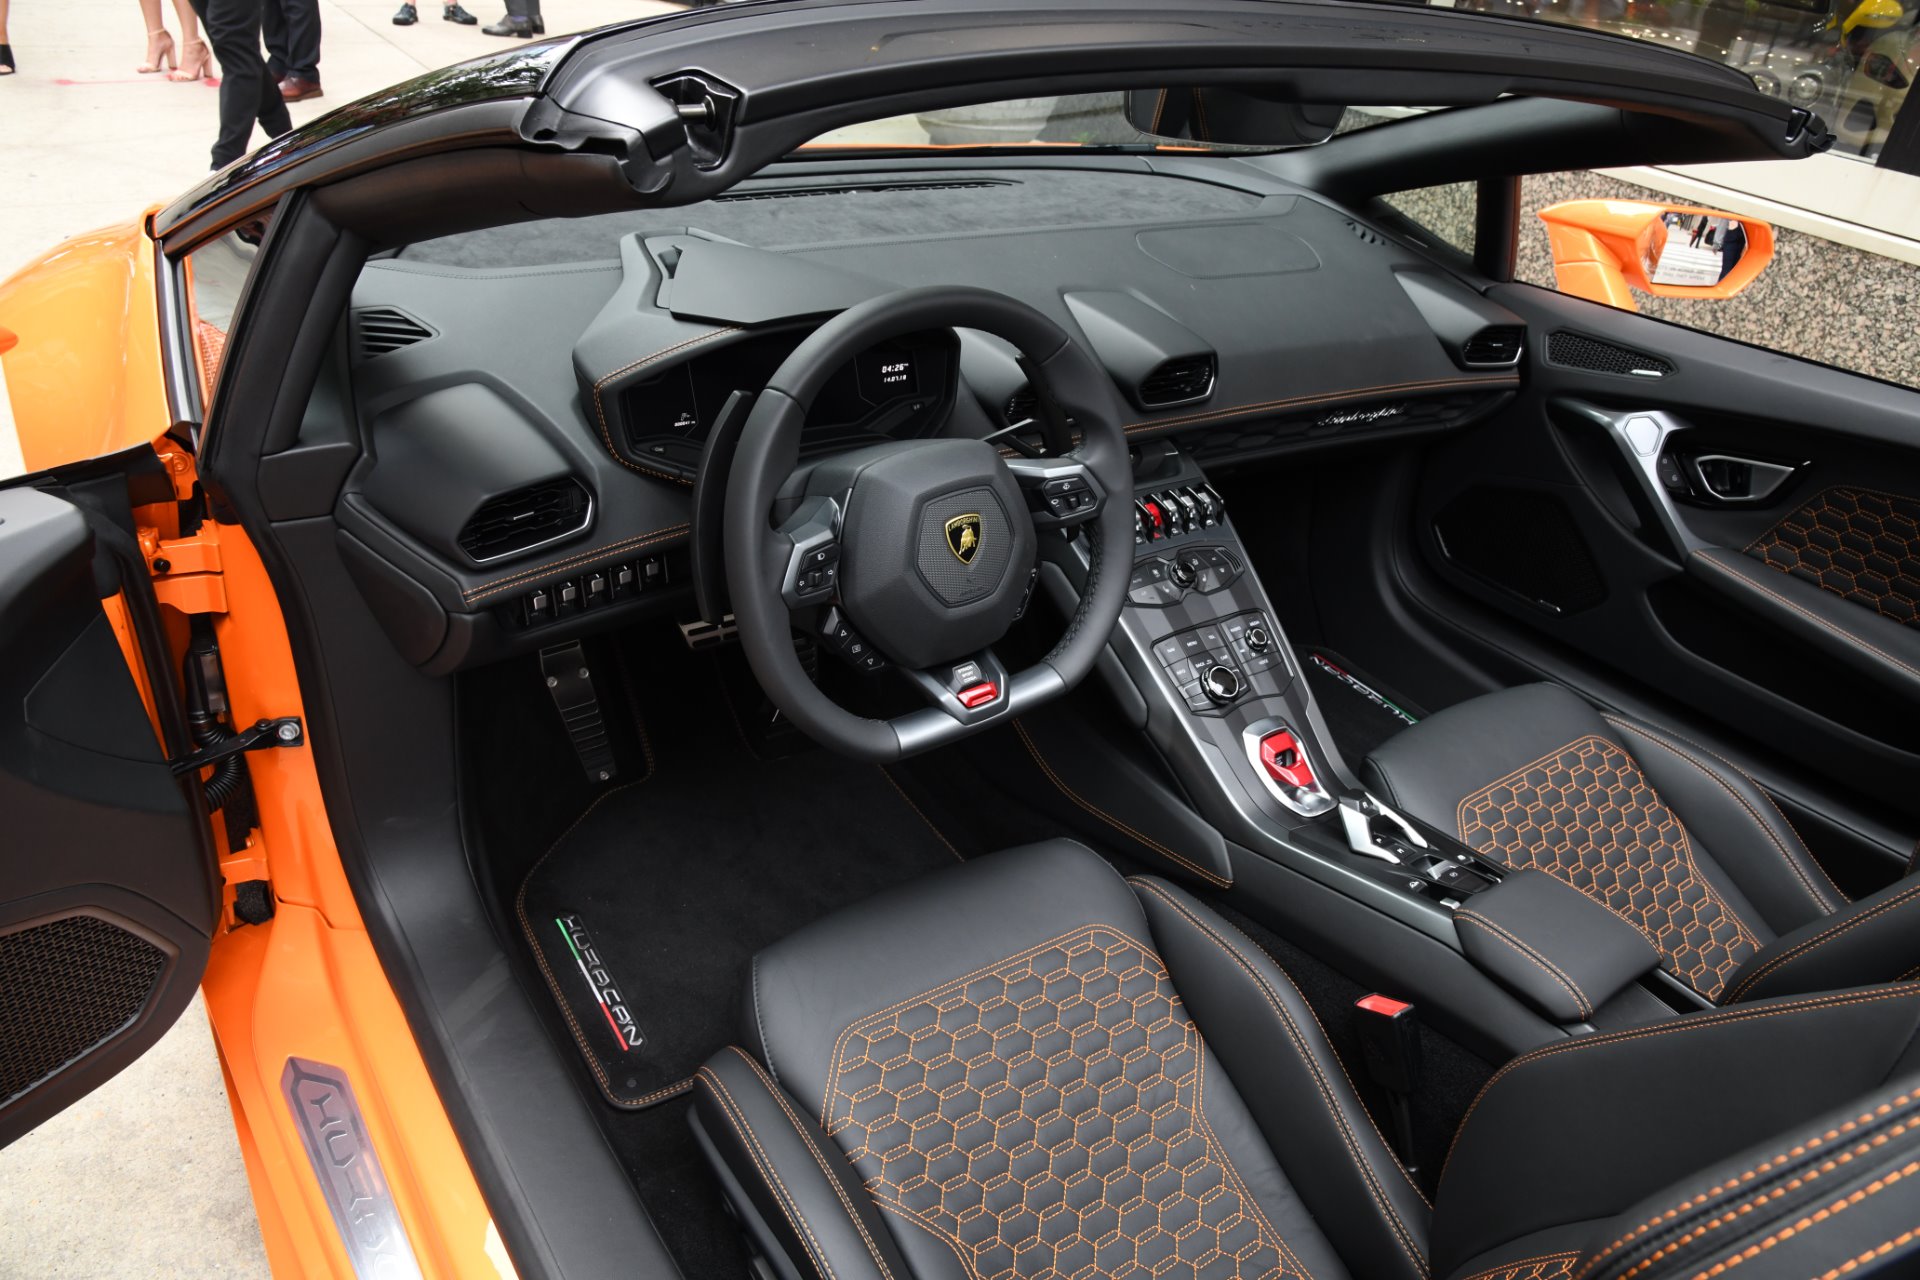 New 2018 Lamborghini Huracan LP 580-2 Spyder | Chicago, IL